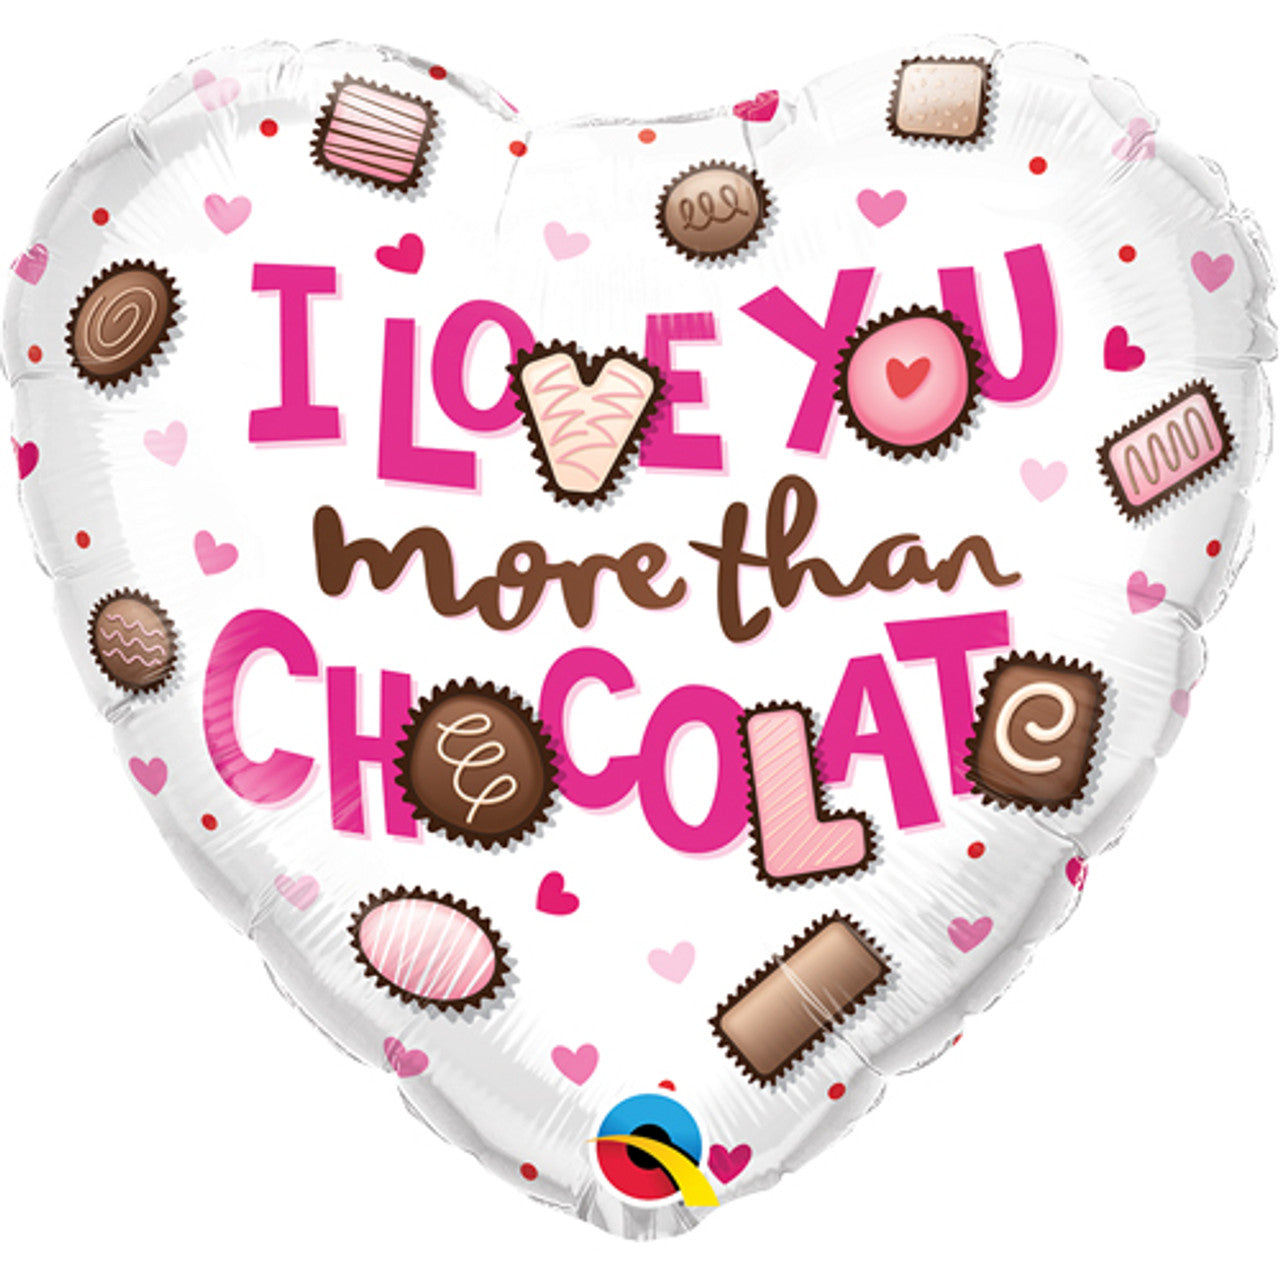 I Love You More Than Chocolate Balloon